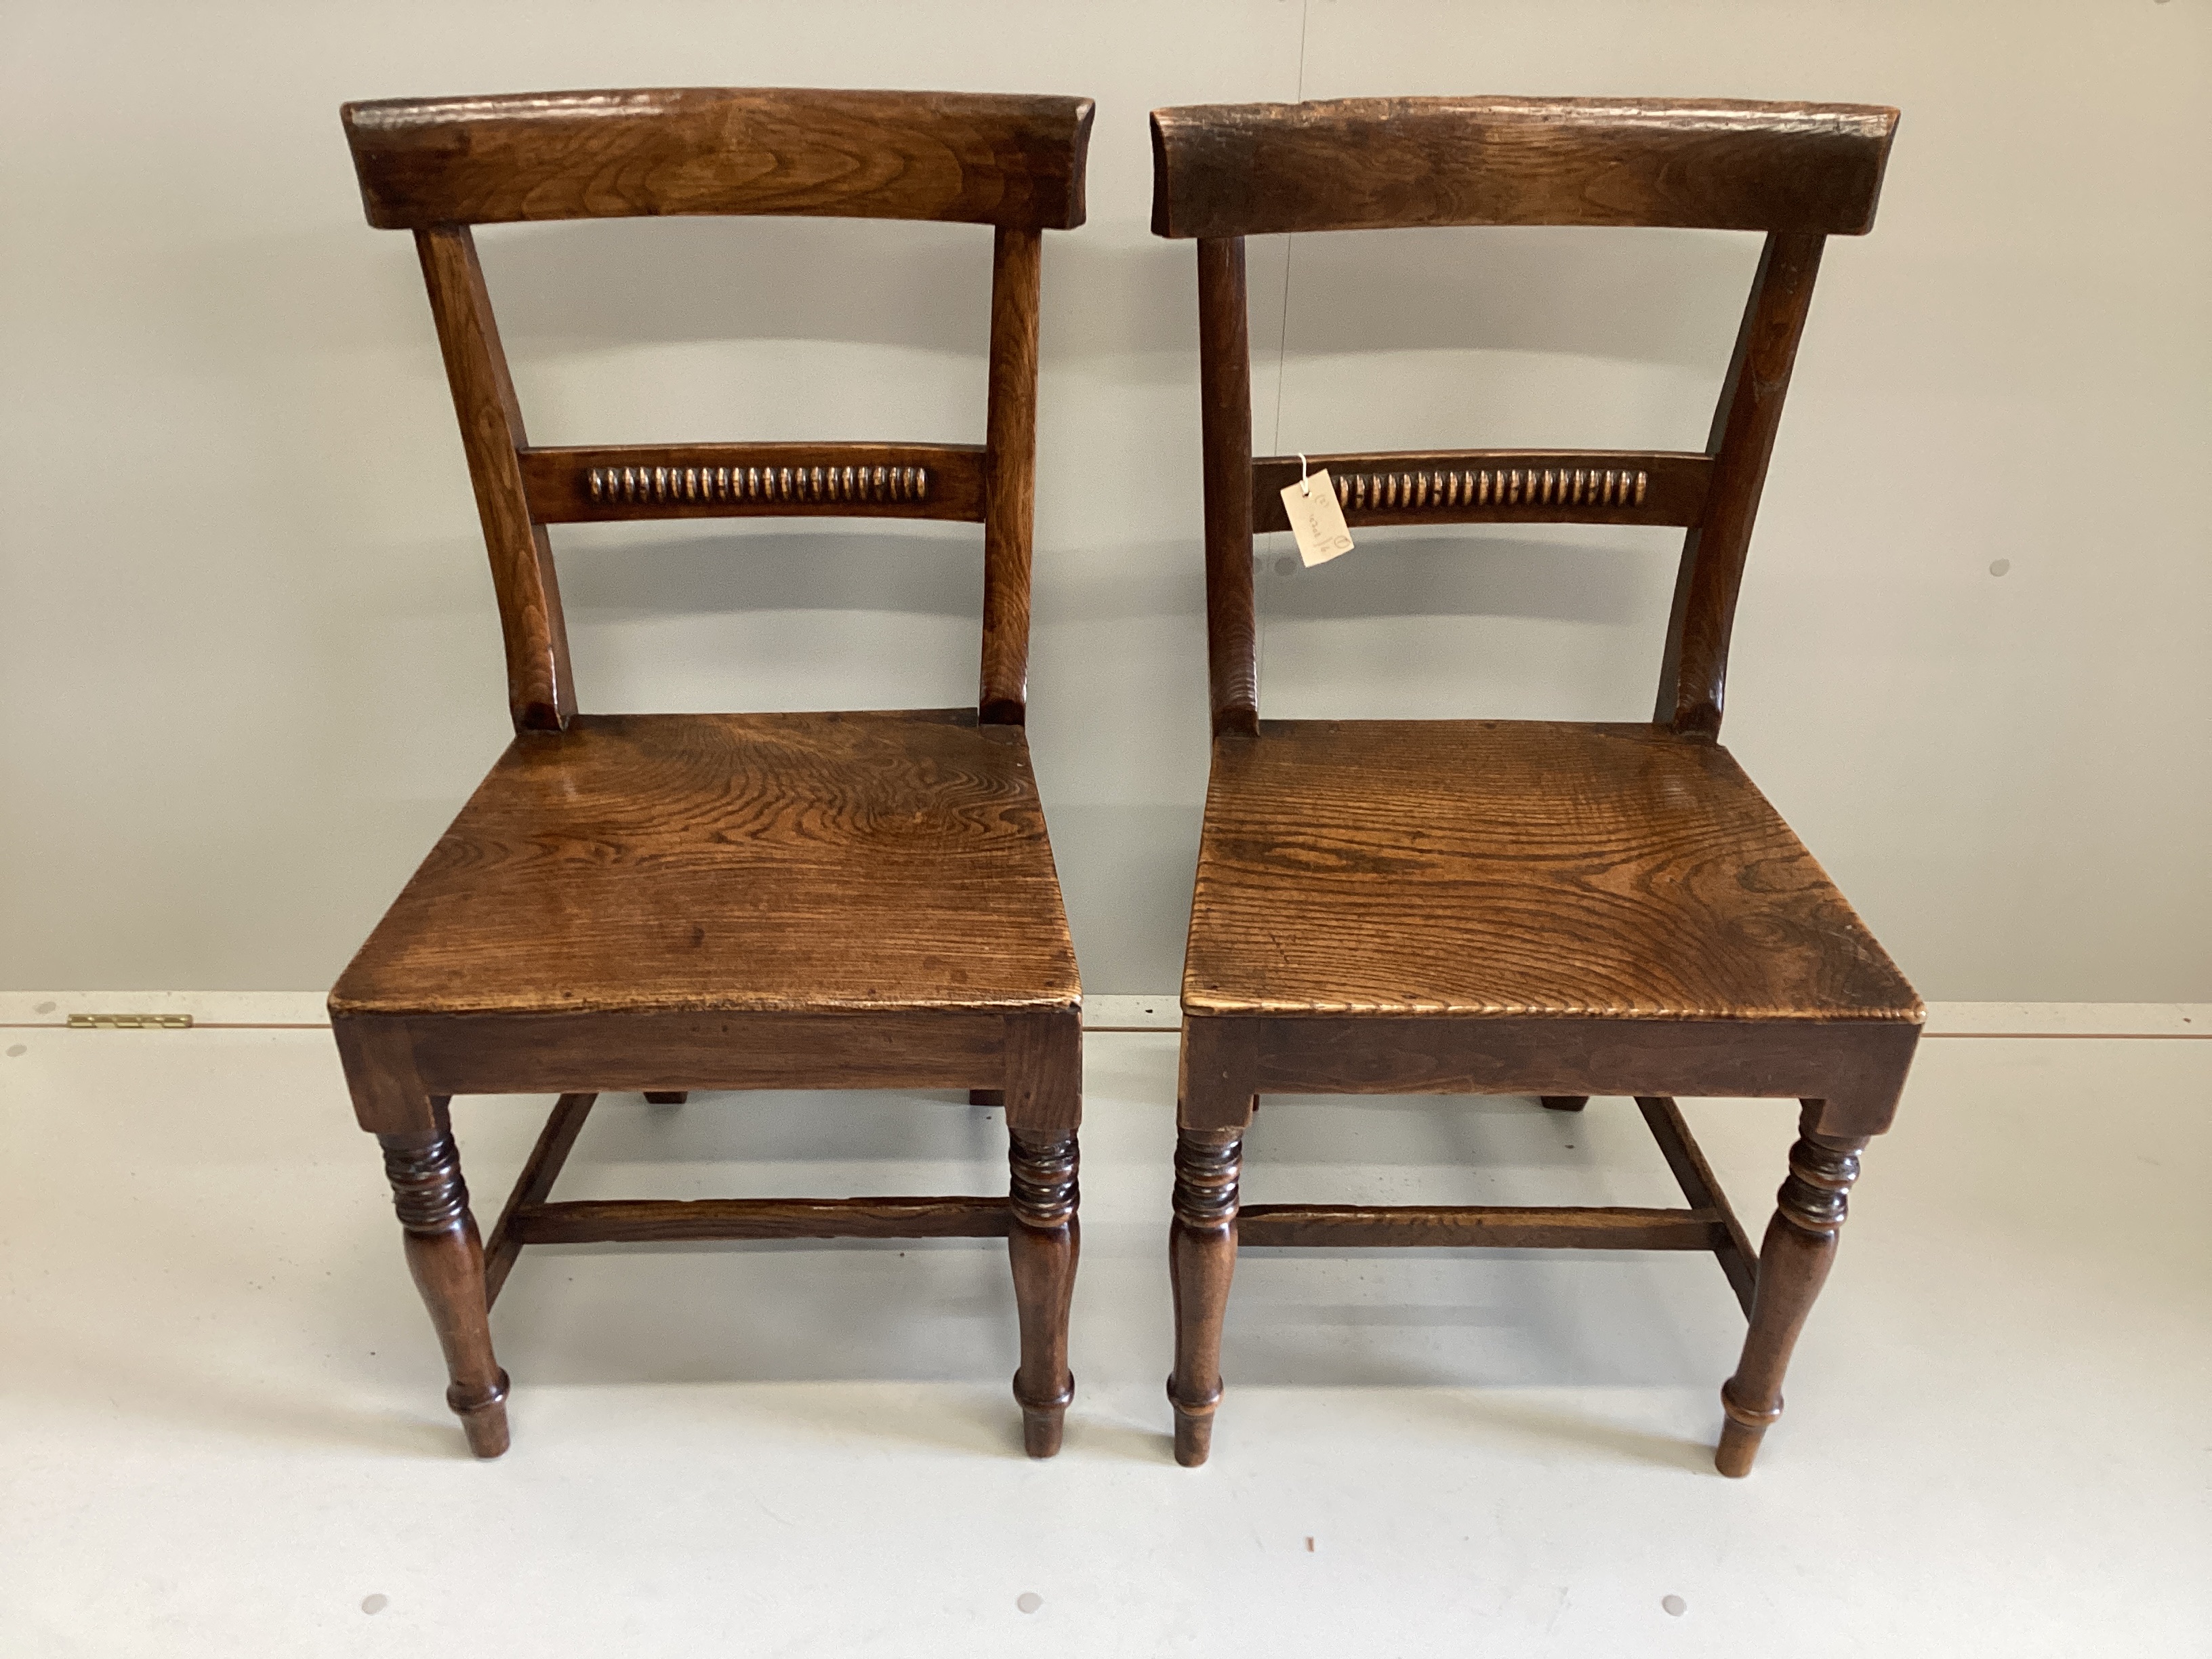 A pair of Regency provincial elm wood seat dining chairs, width 44cm, depth 36cm, height 86cm